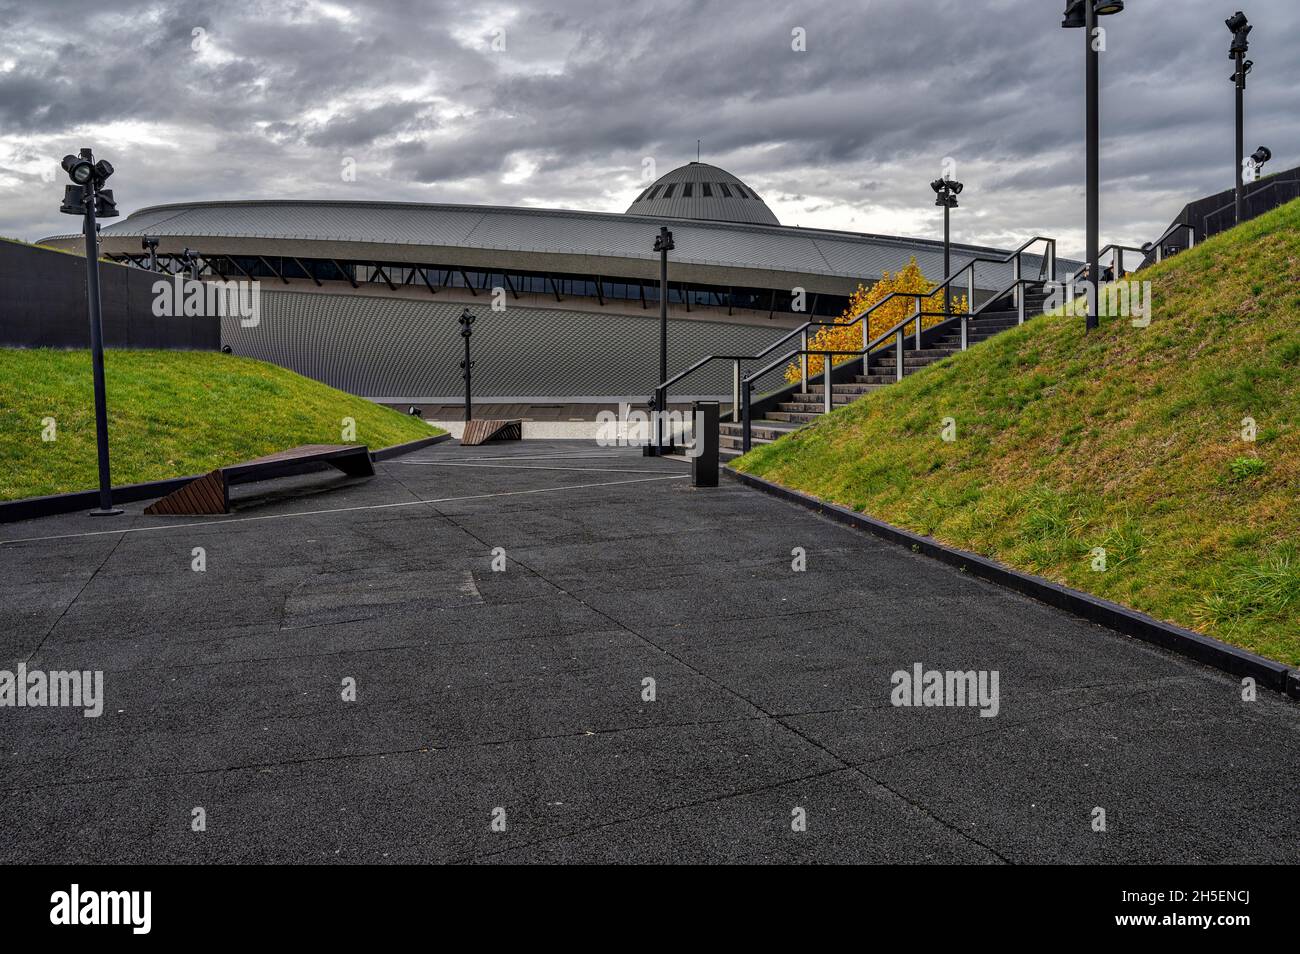 Spodek Arena en Katowice en Polonia Foto de stock